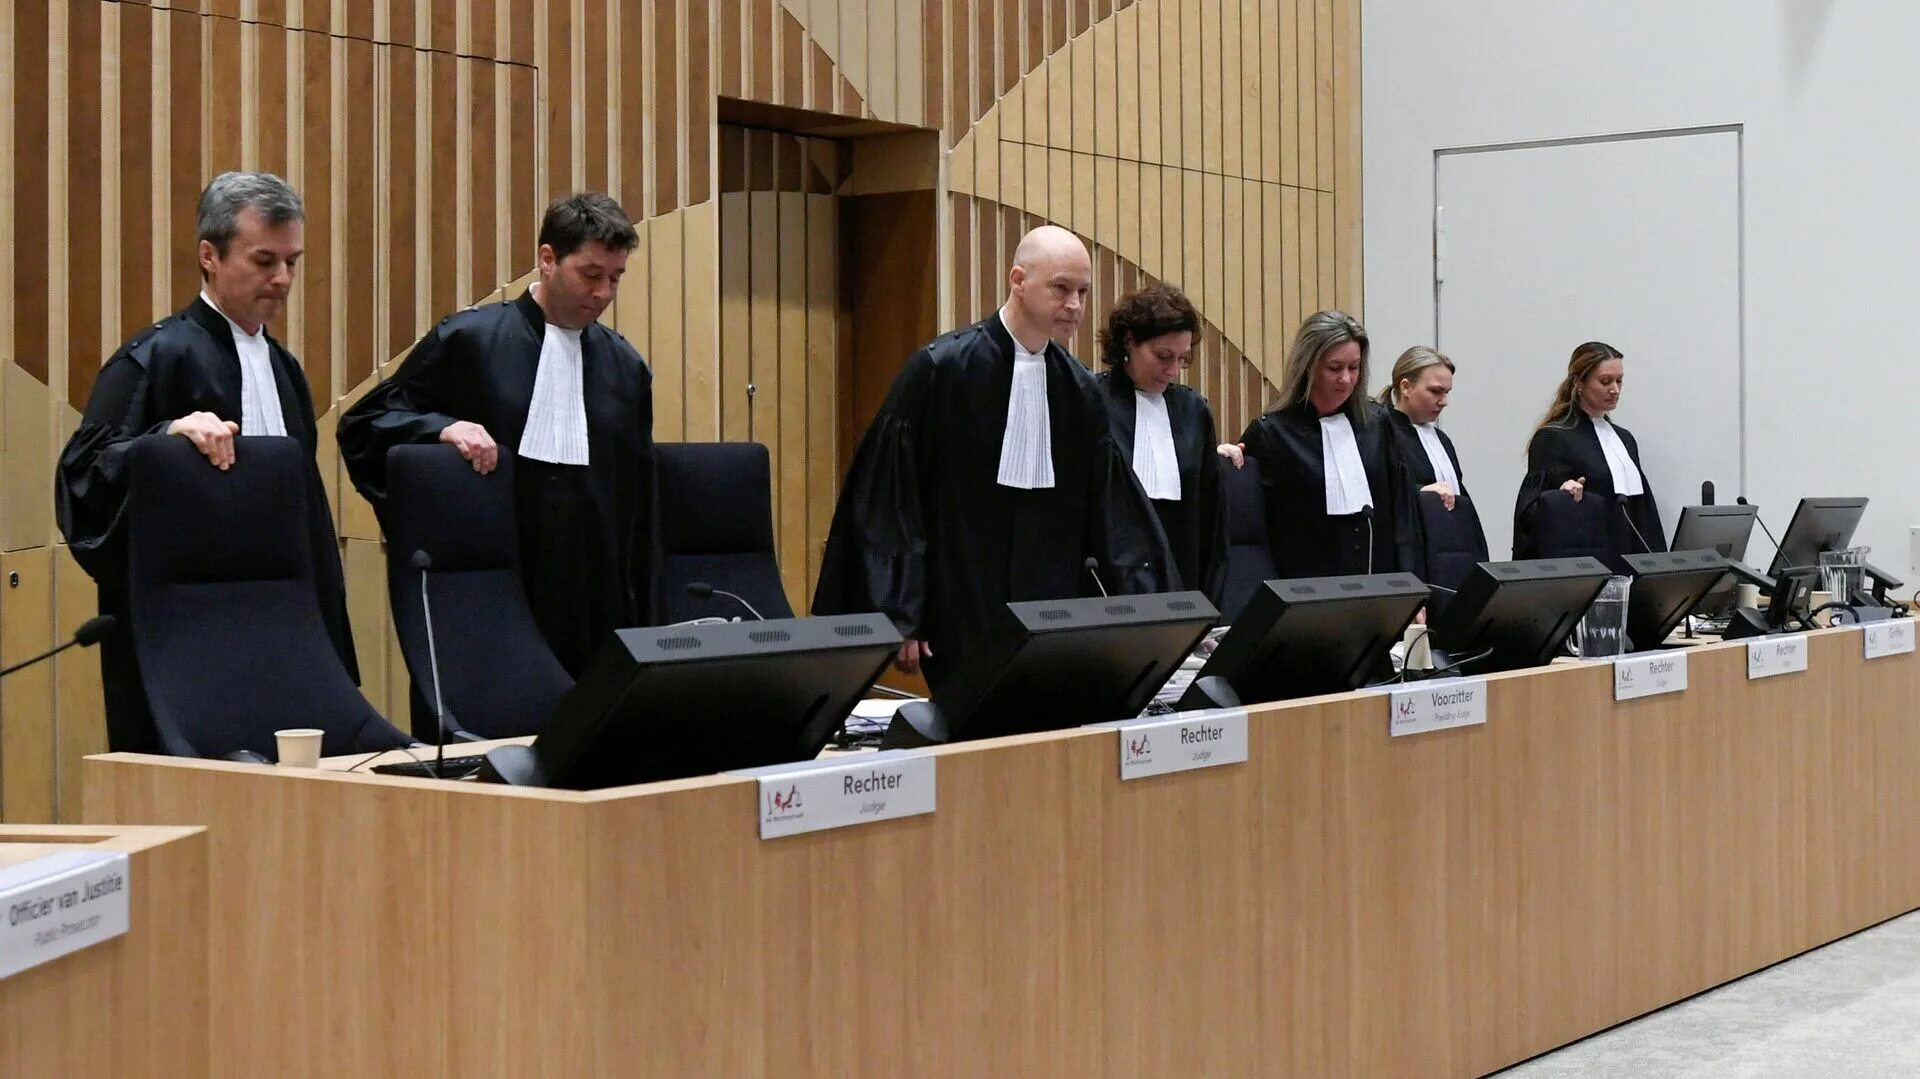 Международный суд ООН В Гааге Нидерланды. Голландский суд. Суд Нидерландов. Судья международного суда в Гааге.